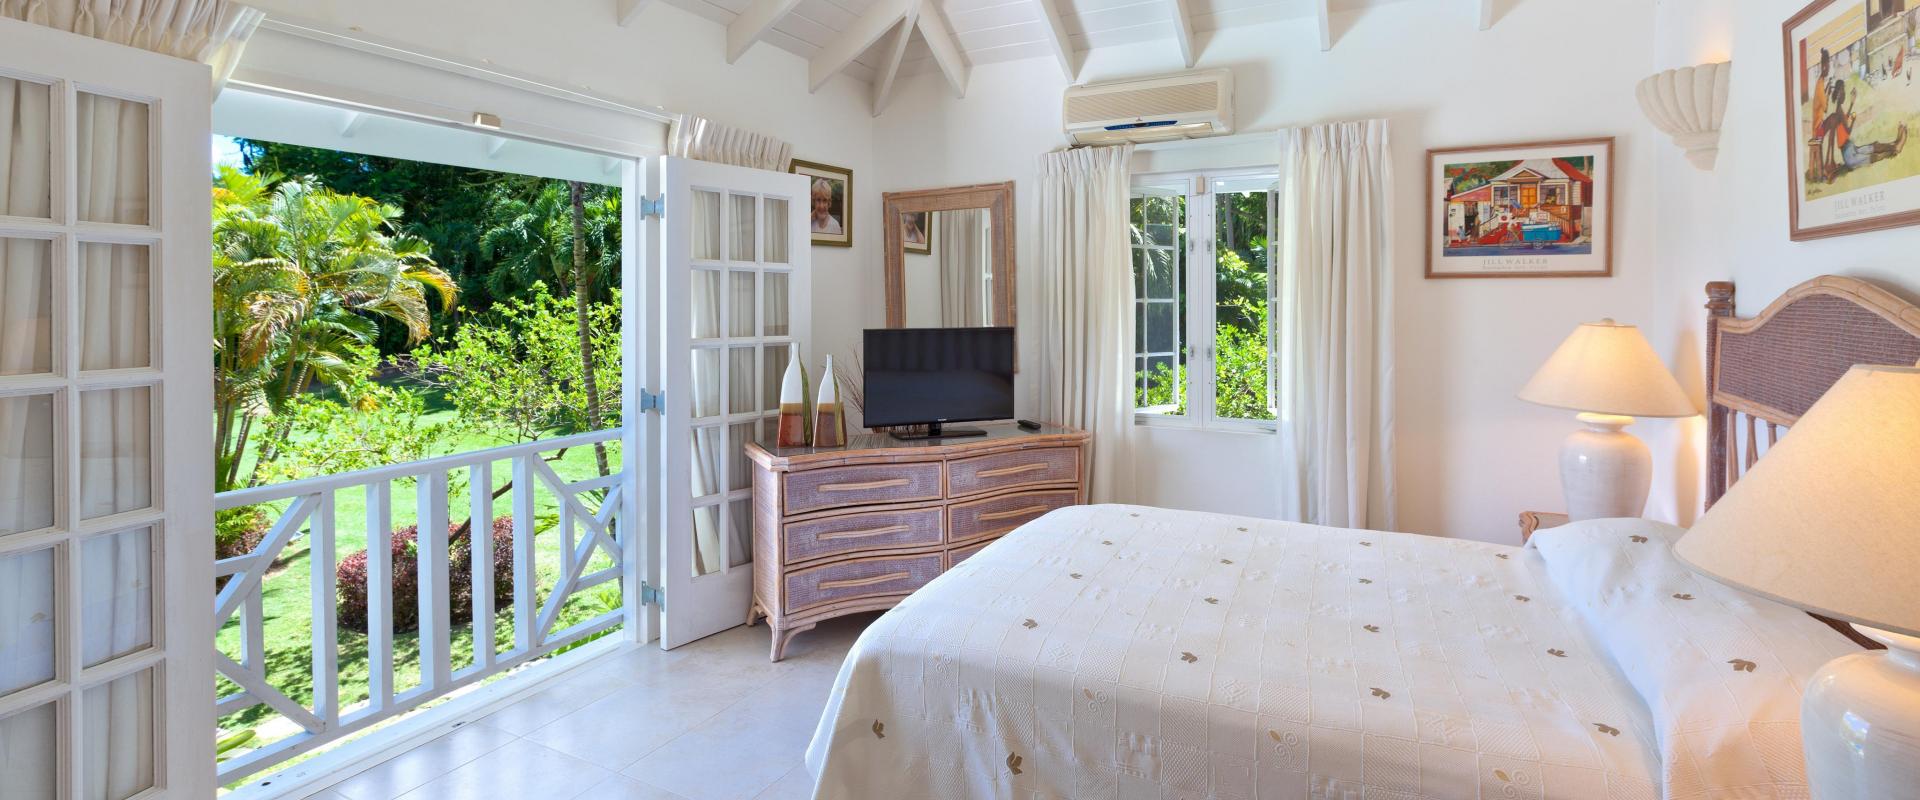 Barbados Holiday Rental Rose Of Sharon Sandy Lane Bedroom 3